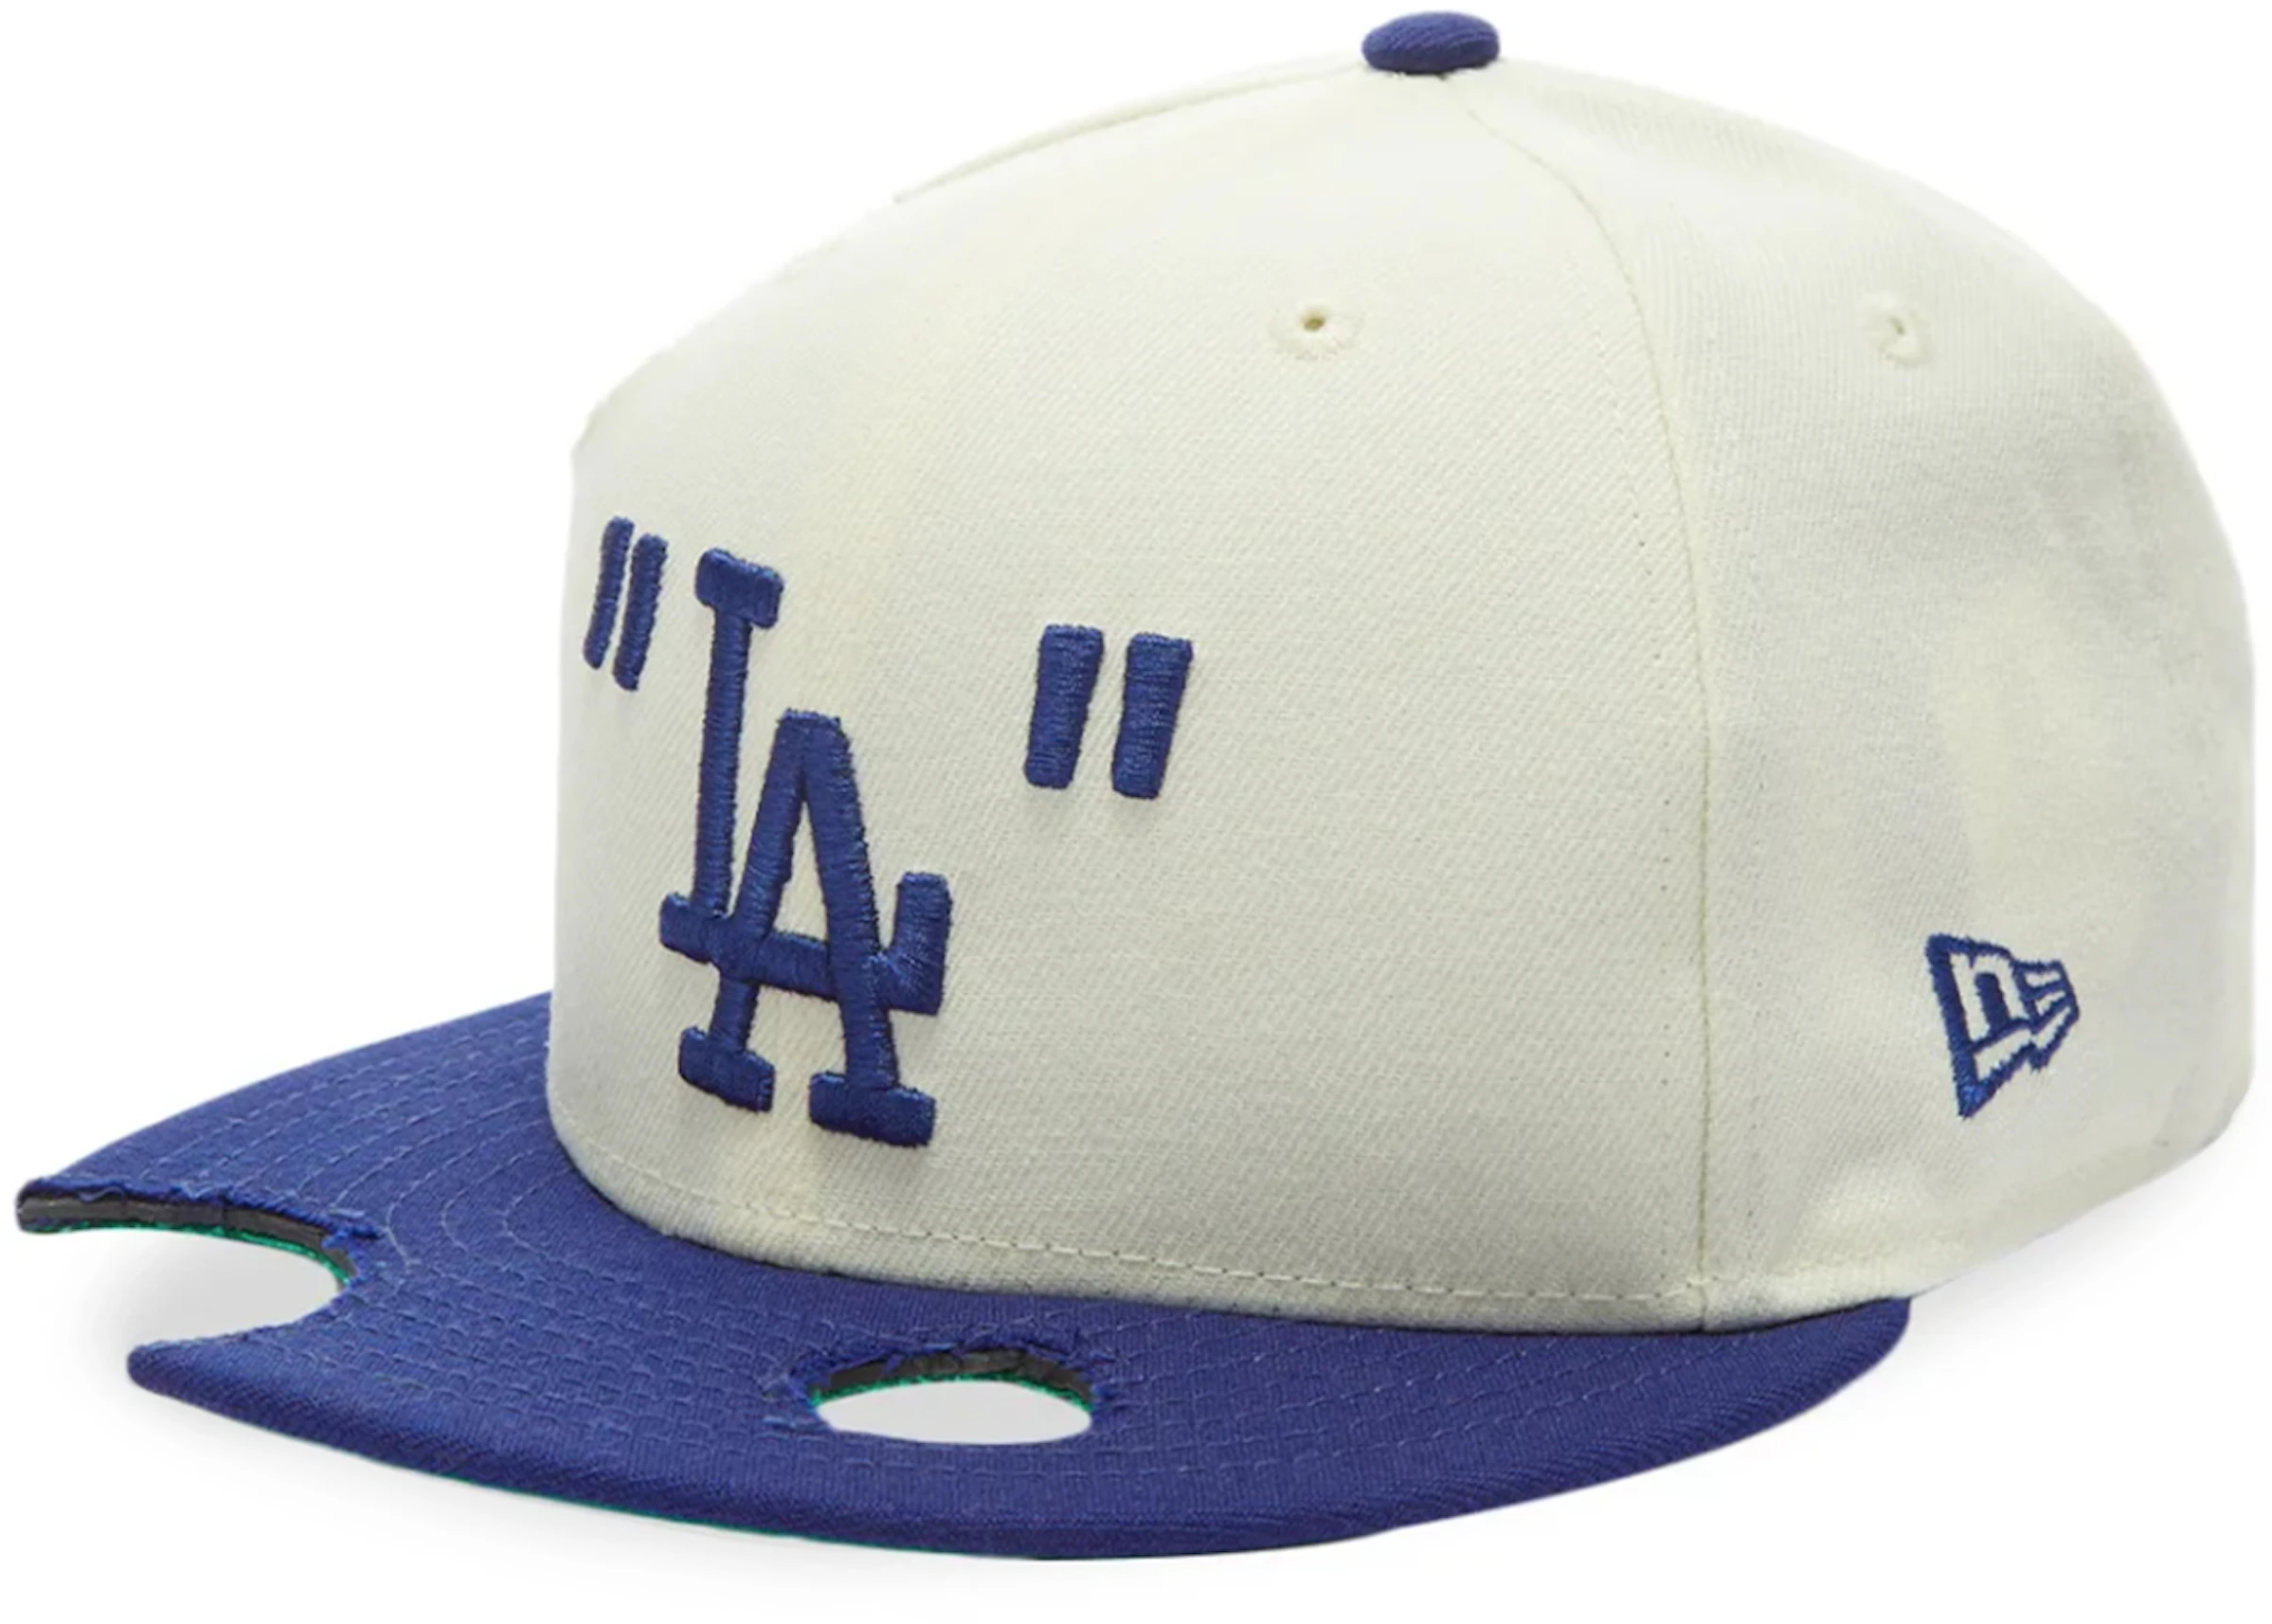 Official Dodgers Hat | peacecommission.kdsg.gov.ng